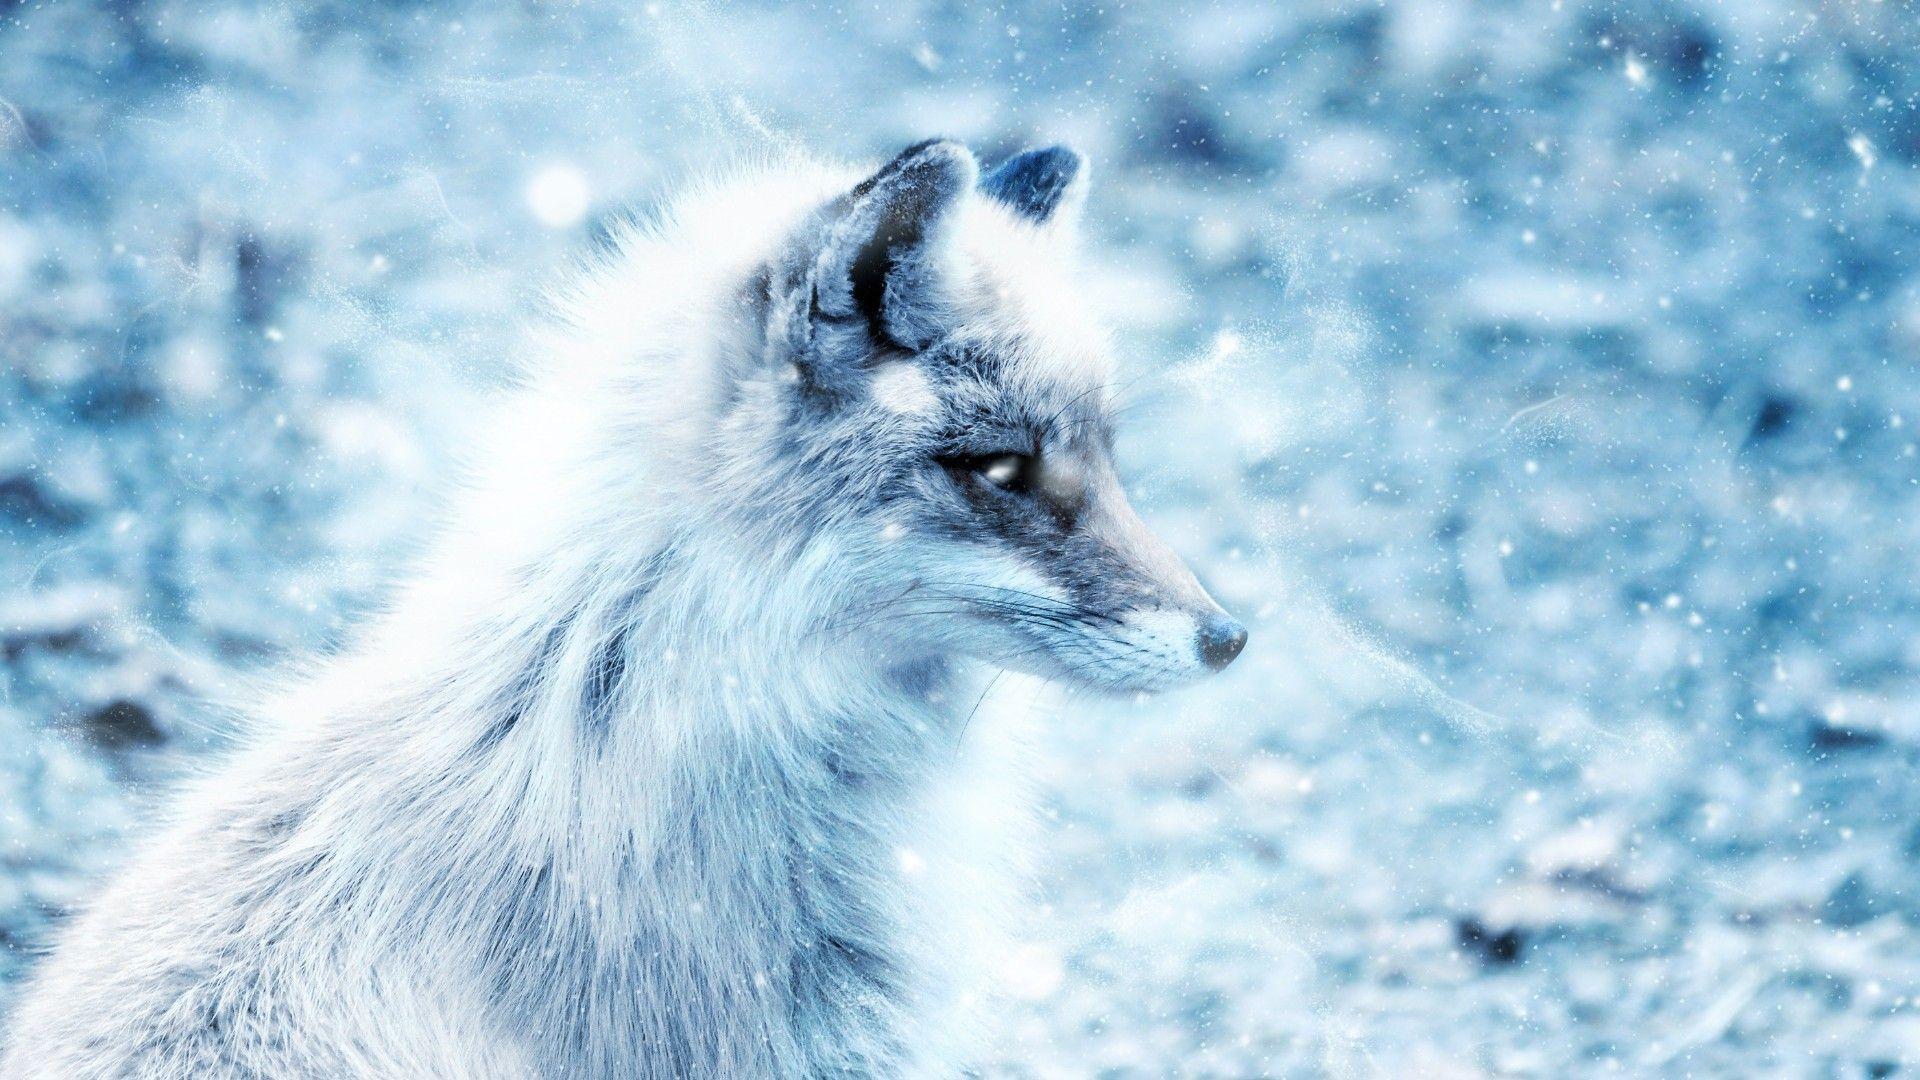 Cyberspace Arctic fox by JulianoLoren on DeviantArt